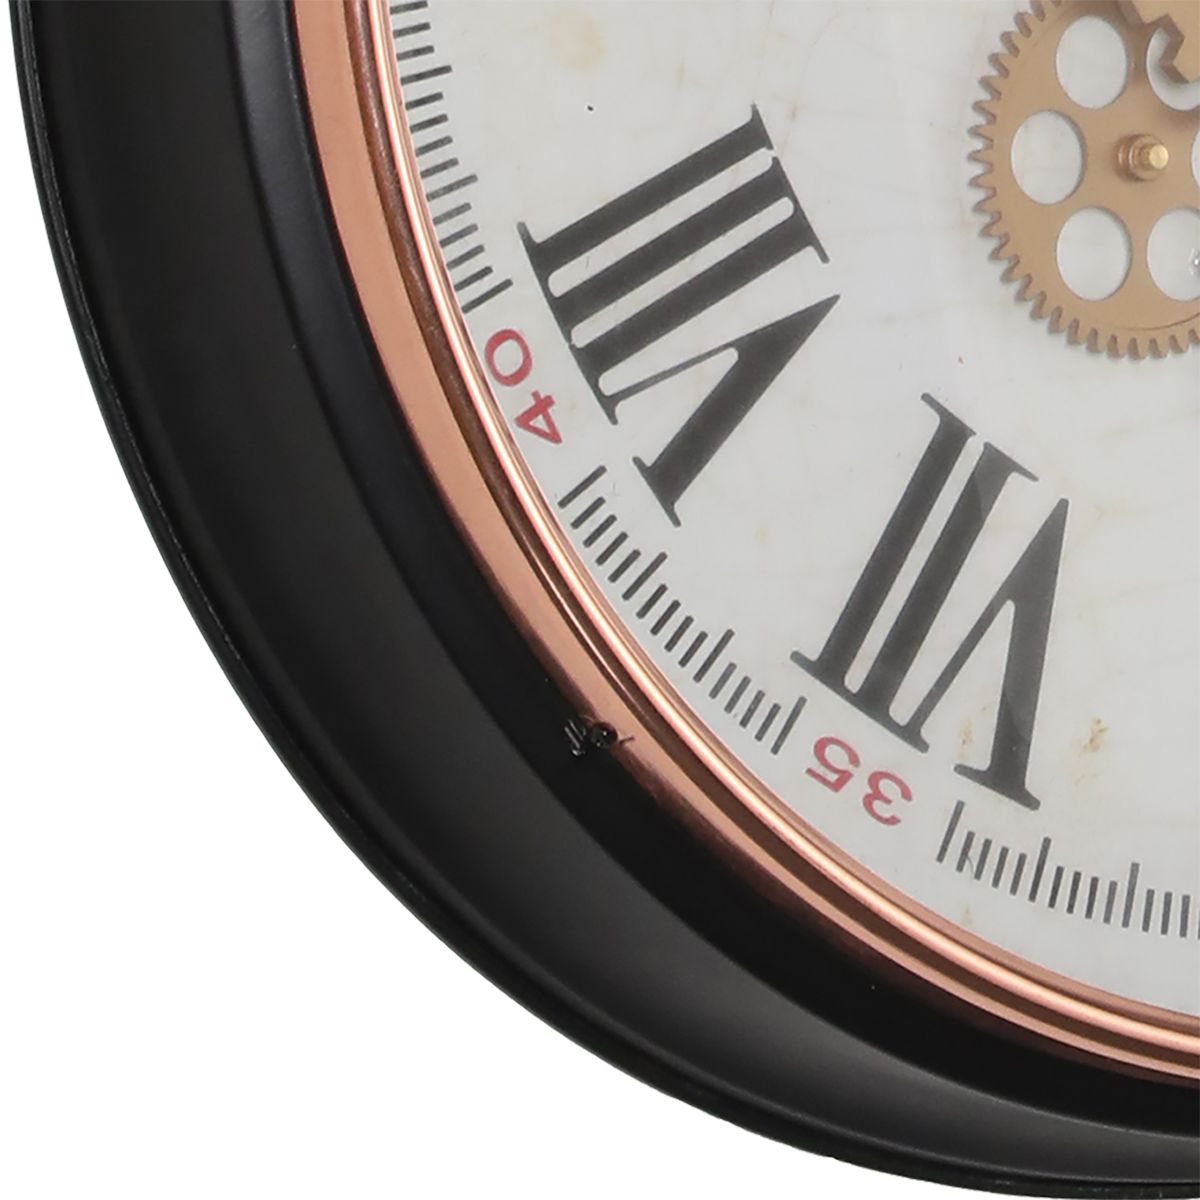 Industrial/vintage-inspired clock range - MODEL 09